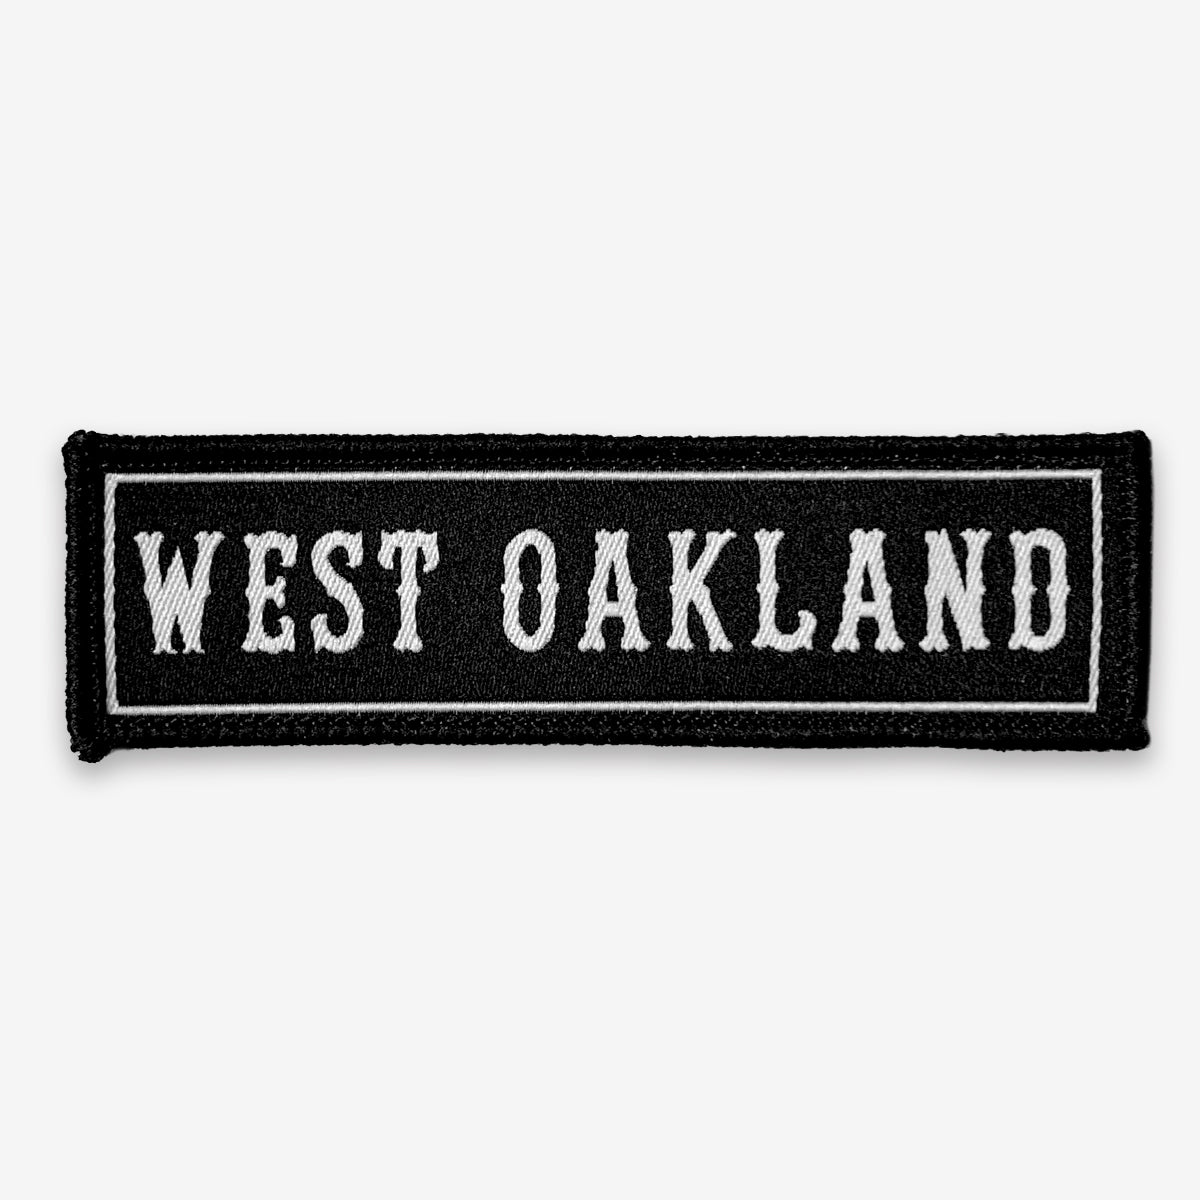 White WEST OAKLAND wordmark on a black rectangular biker-style patch.